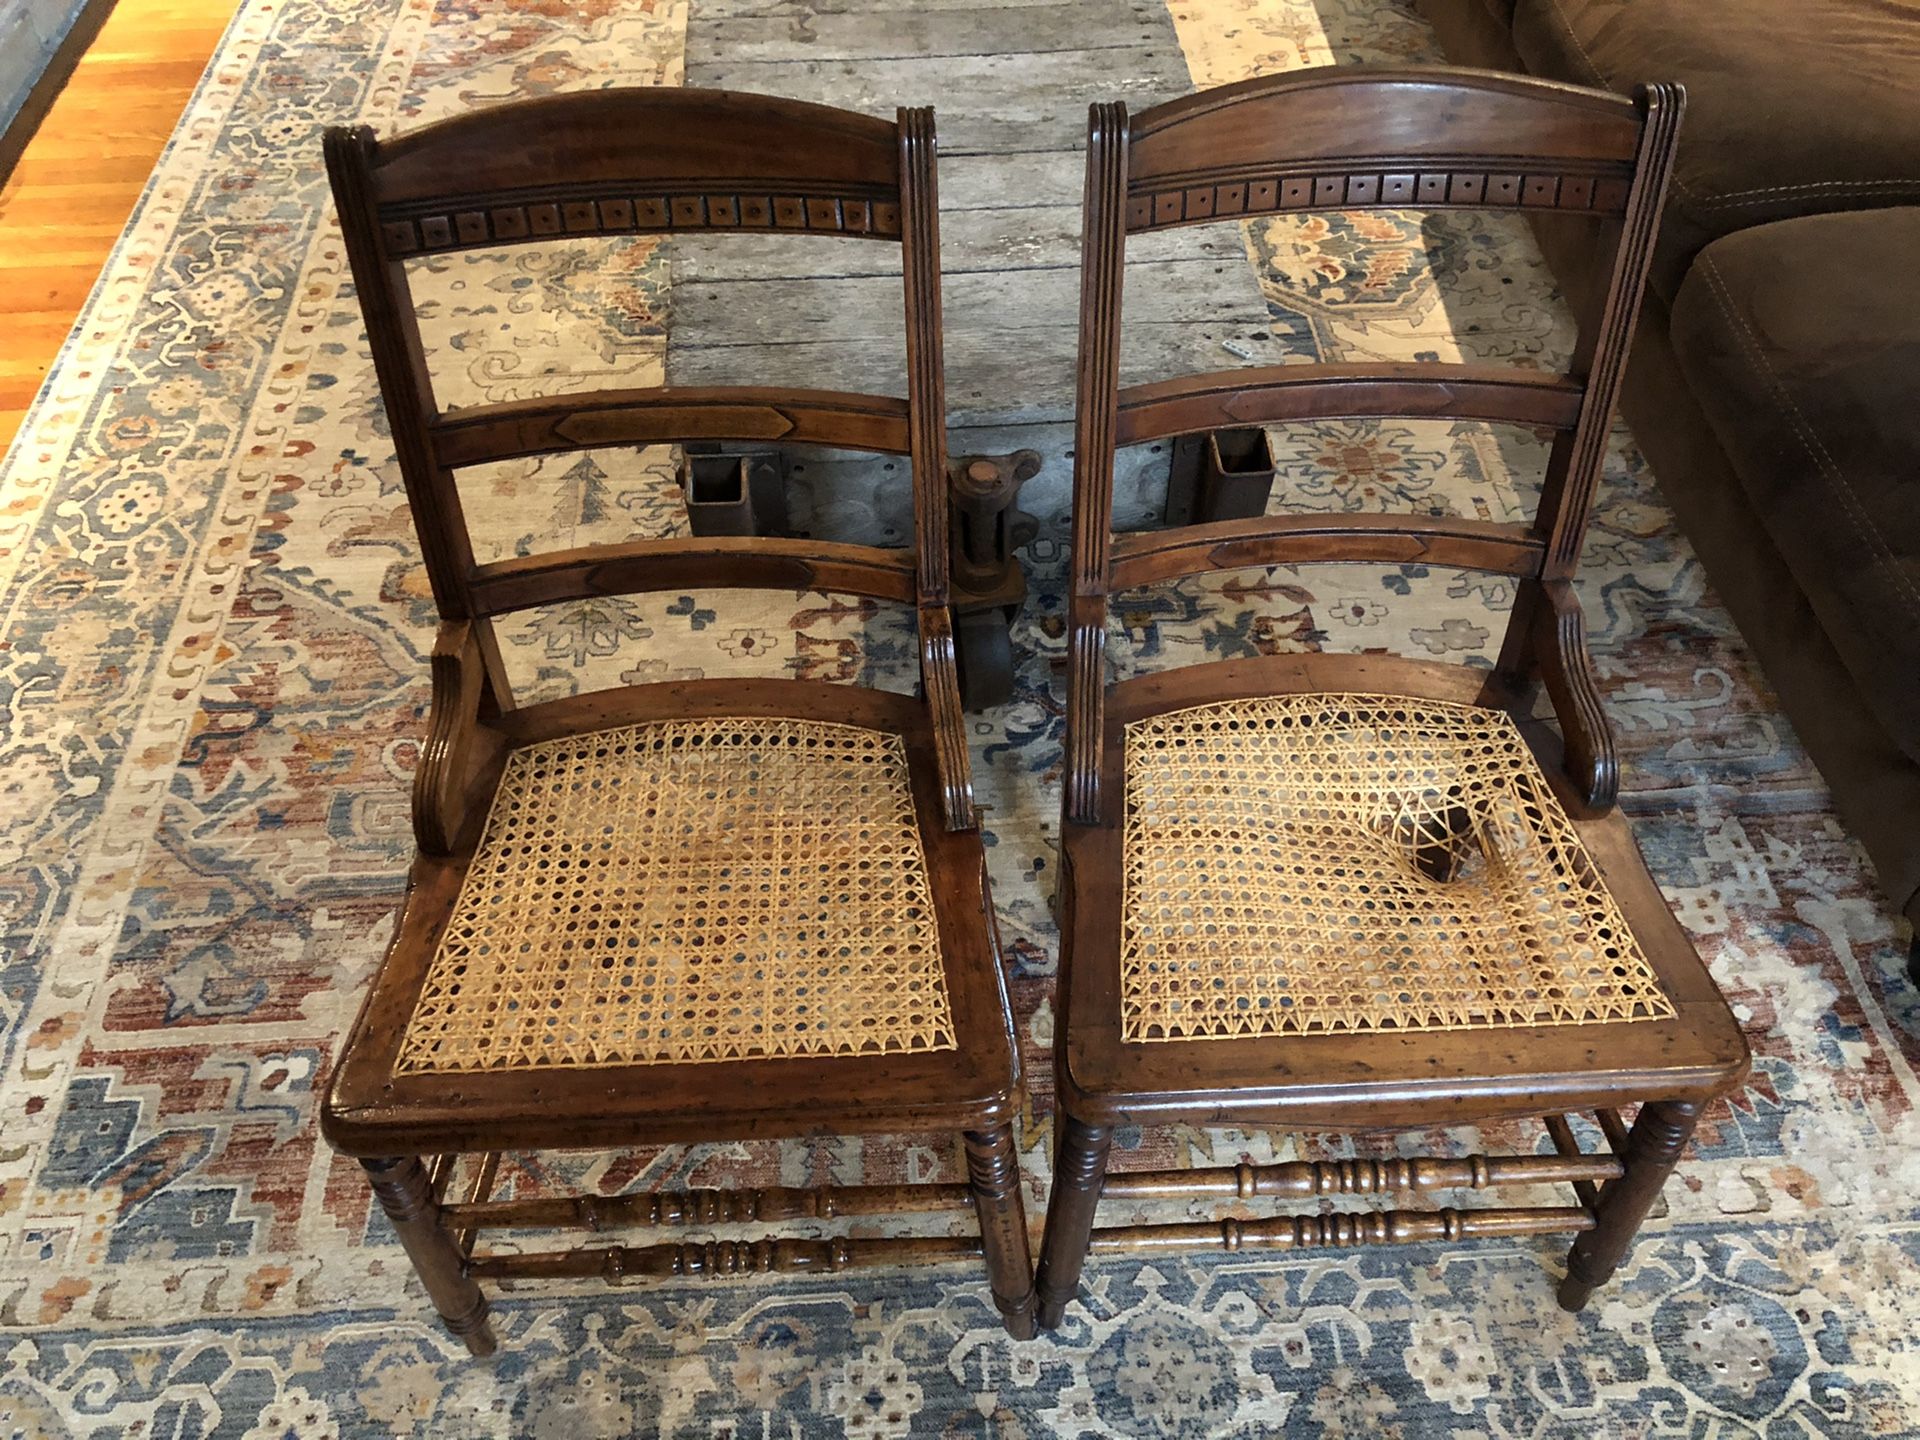 FREE pair of vintage chairs